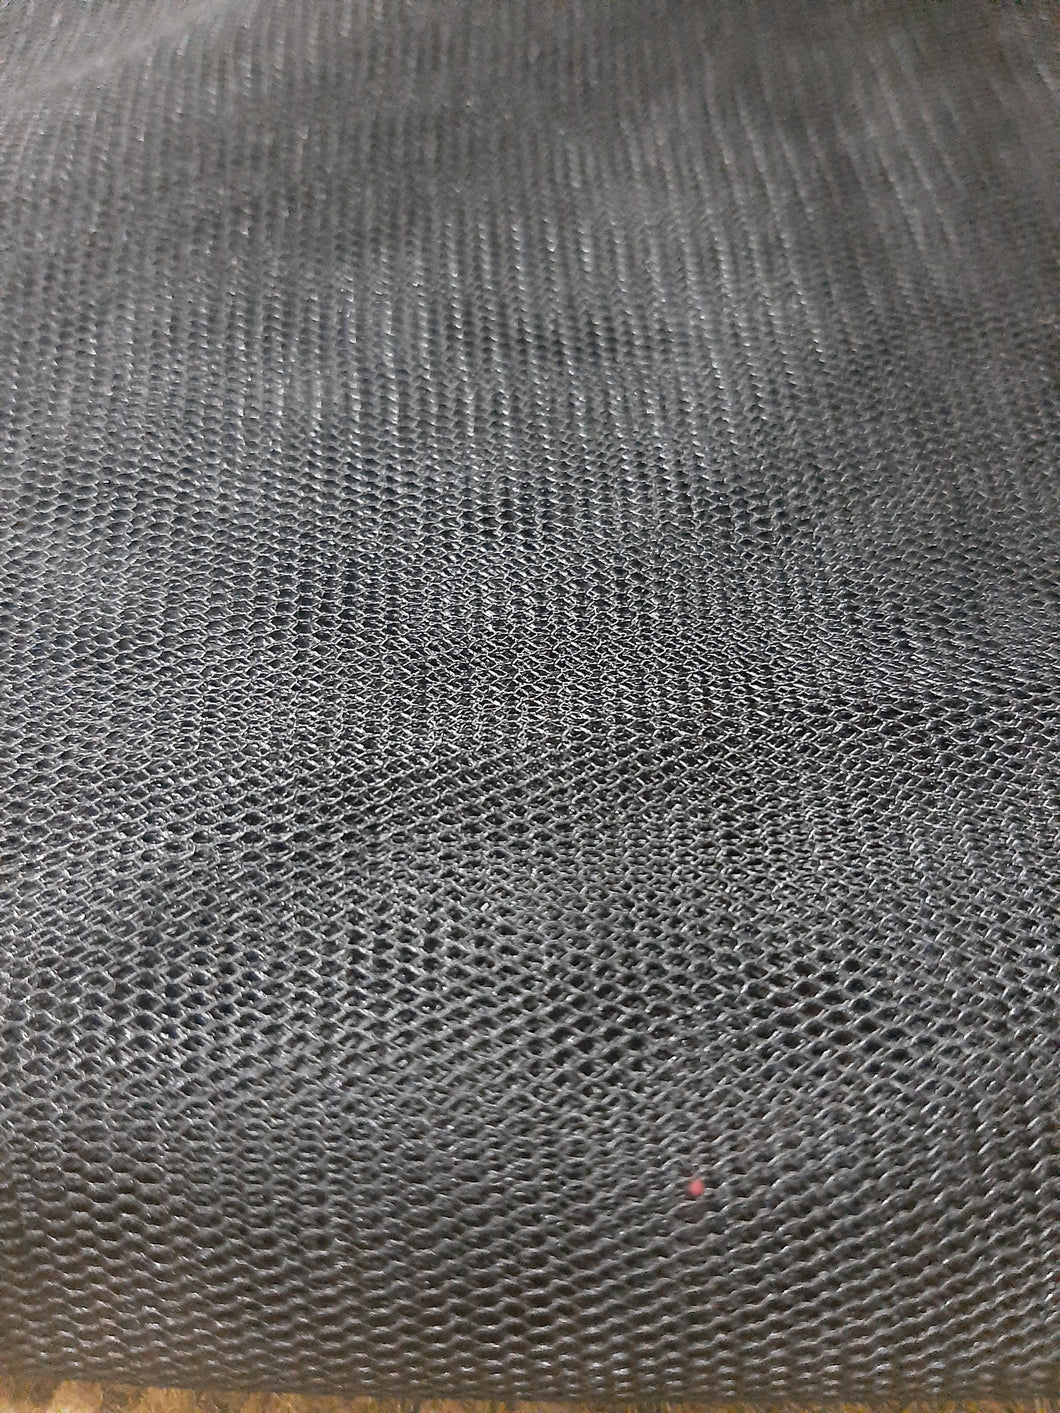 Off brand Net Fabric